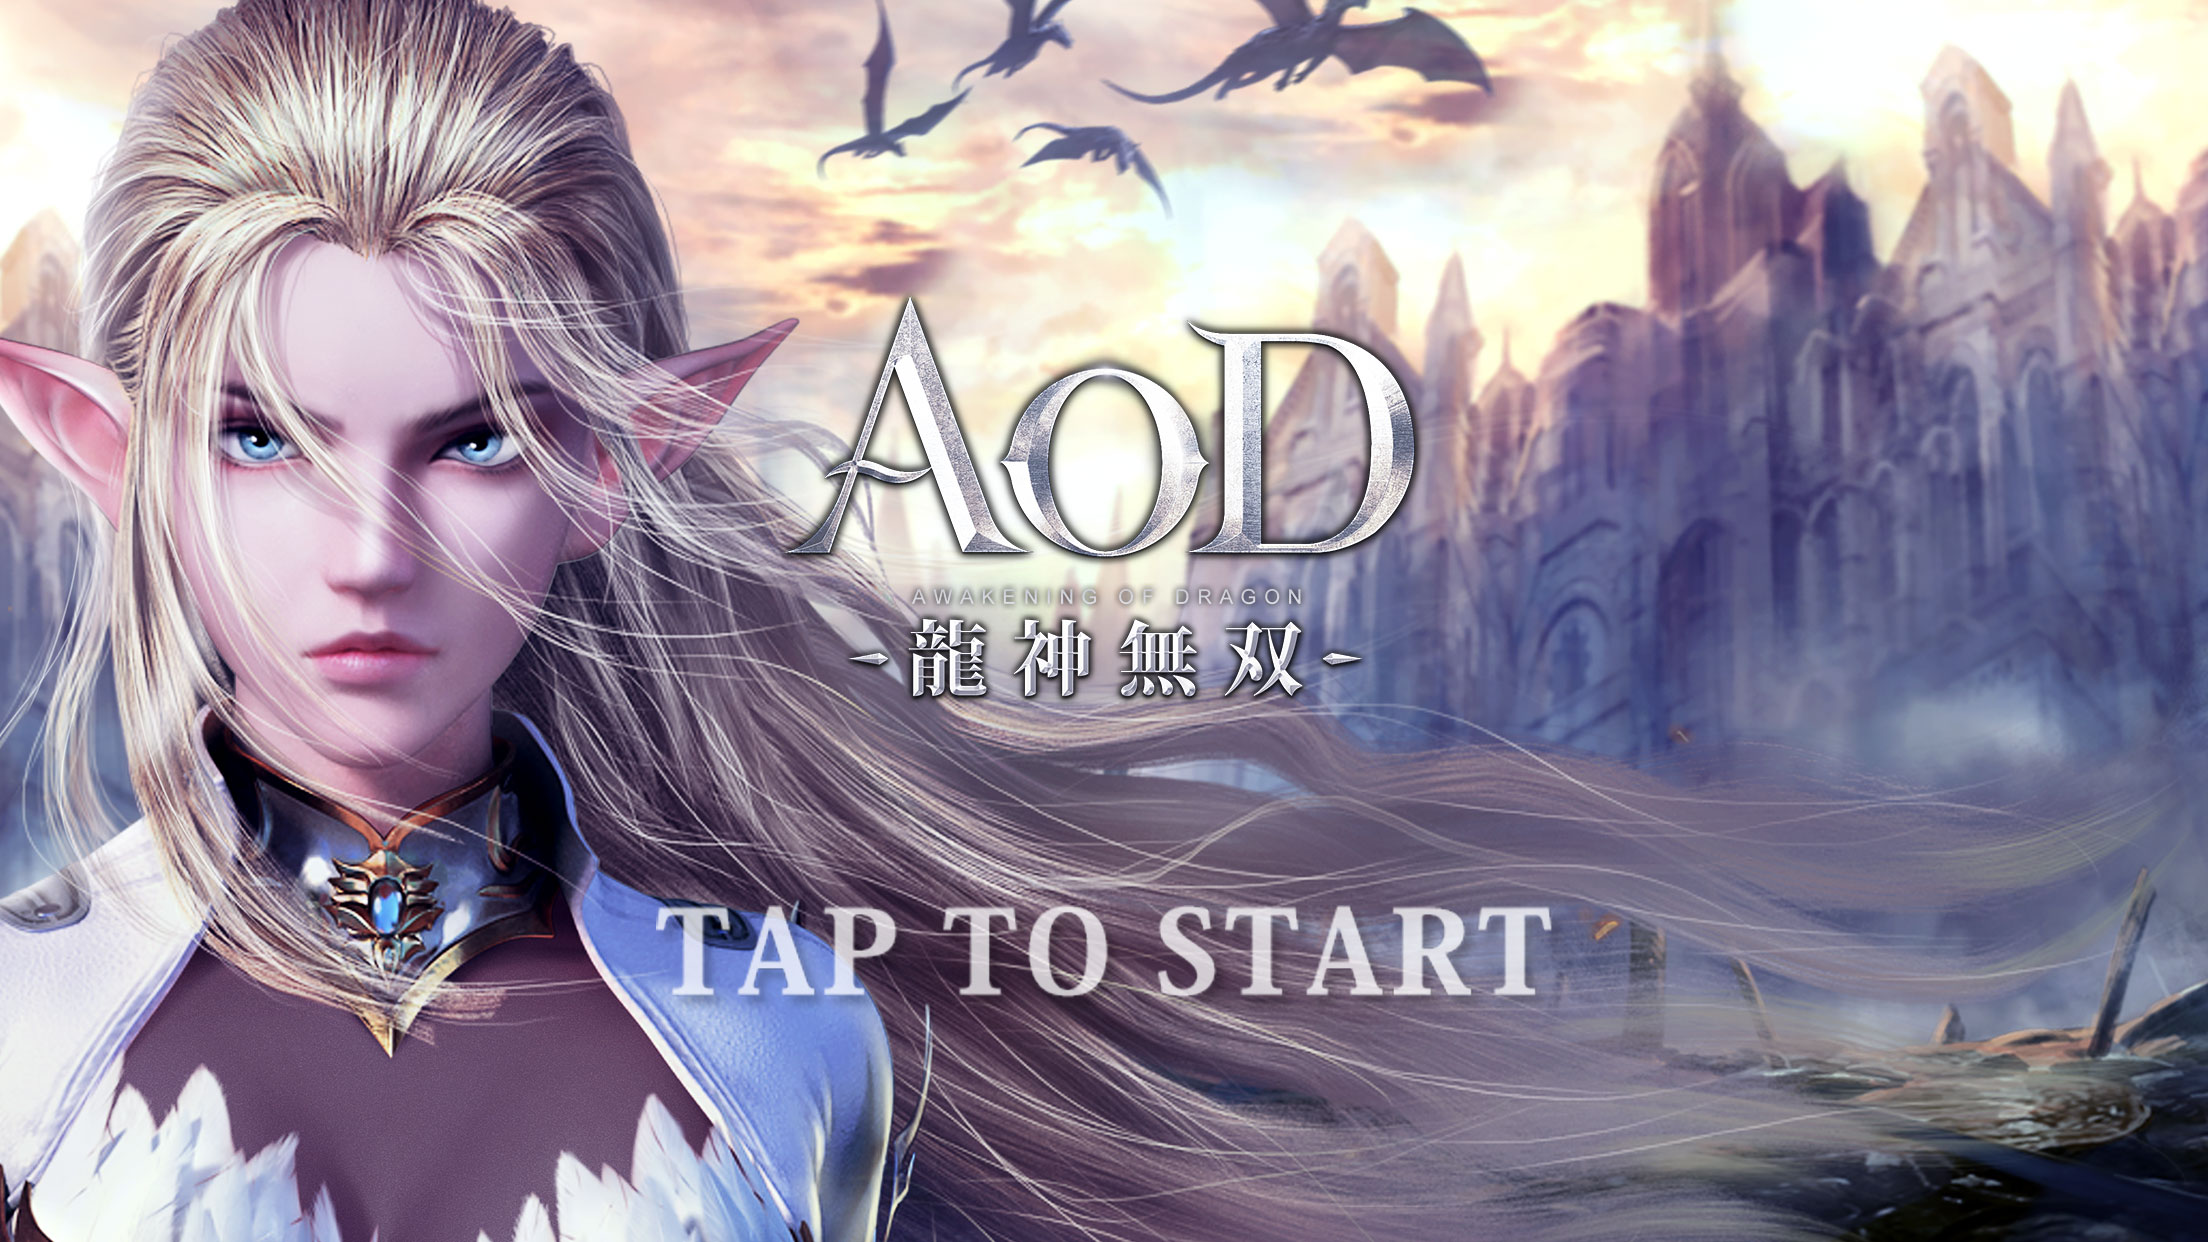 『AOD -龍神無双-』全世界500万ダウンロード突破を誇る新感覚MMORPG